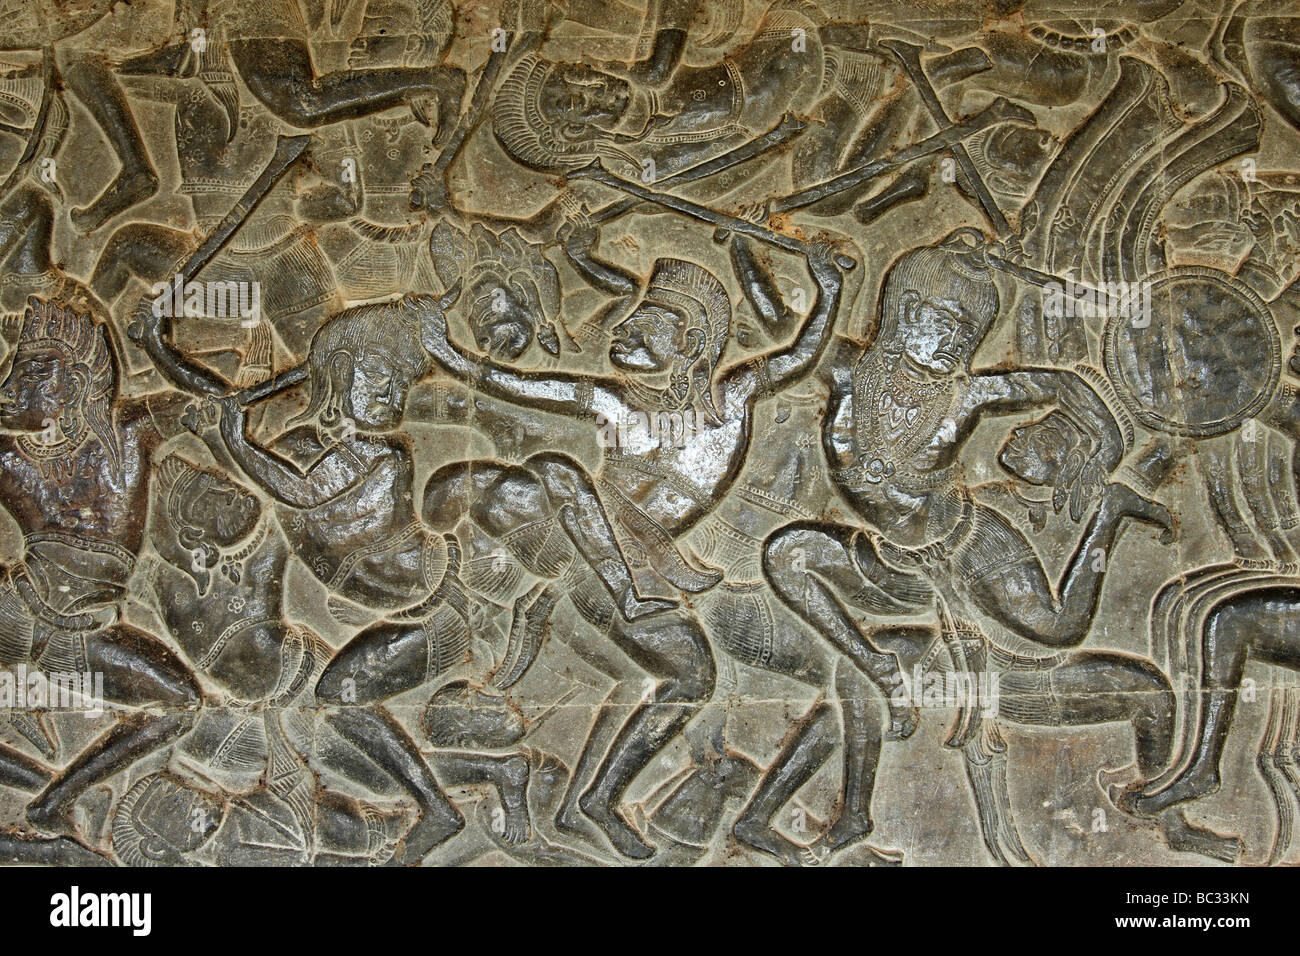 Angkor Wat] [bas relief] depicting [Battle of Kurukshetra], Cambodia Stock  Photo - Alamy